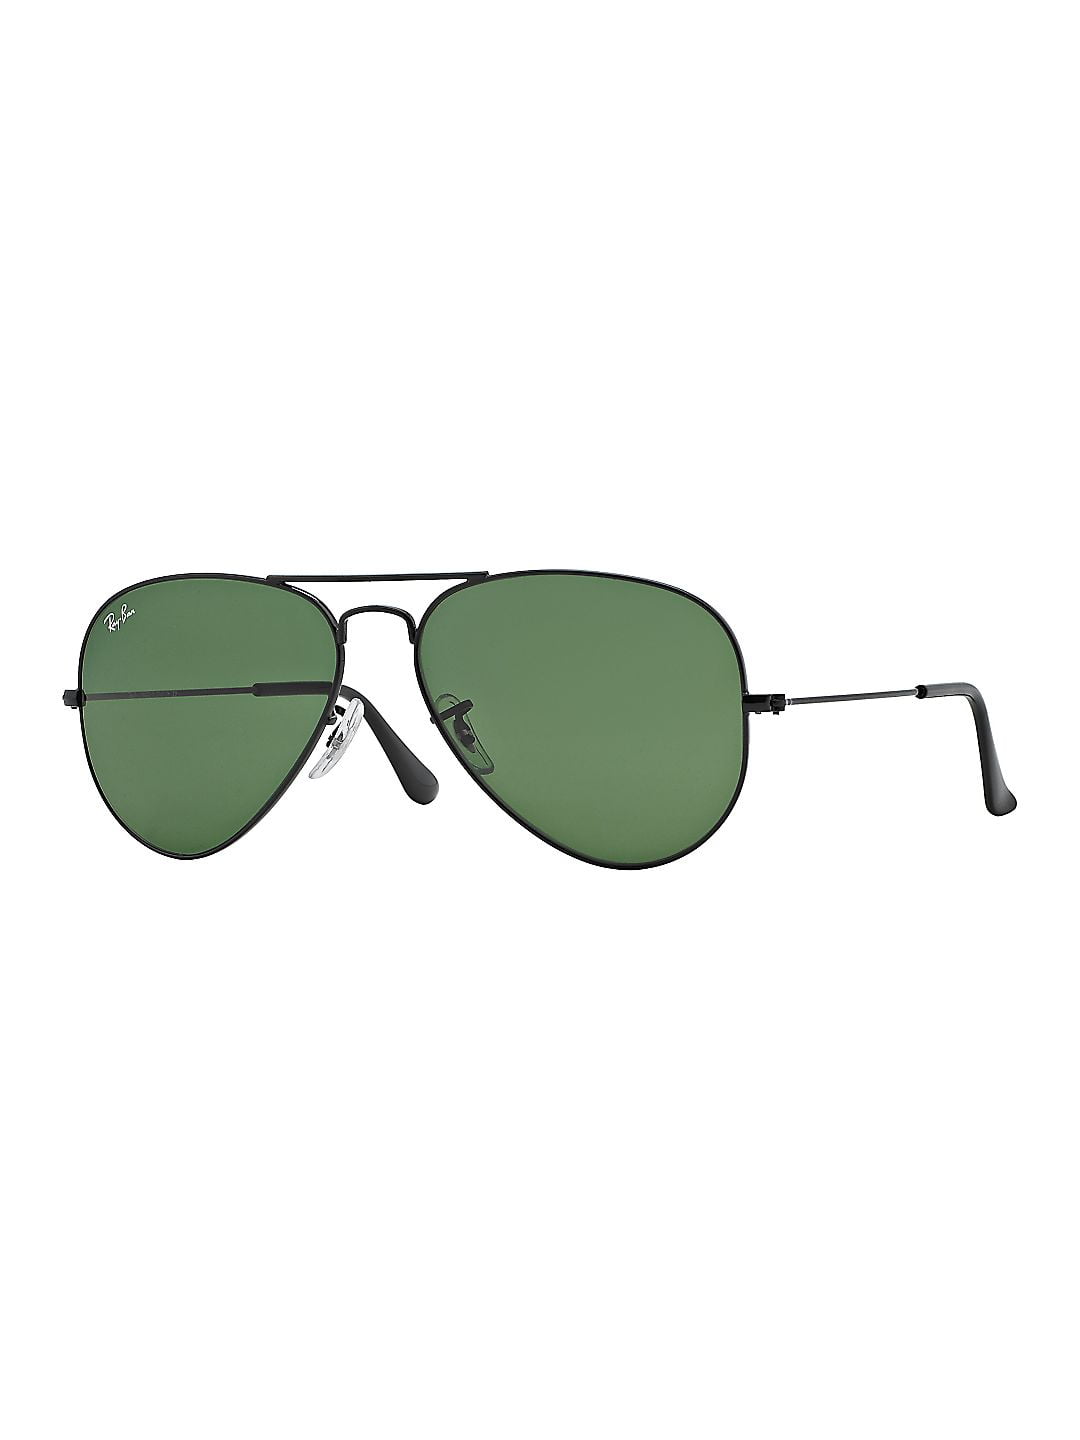 Ray-Ban Women Original Aviator 58 Mm Sunglasses, Black/Green